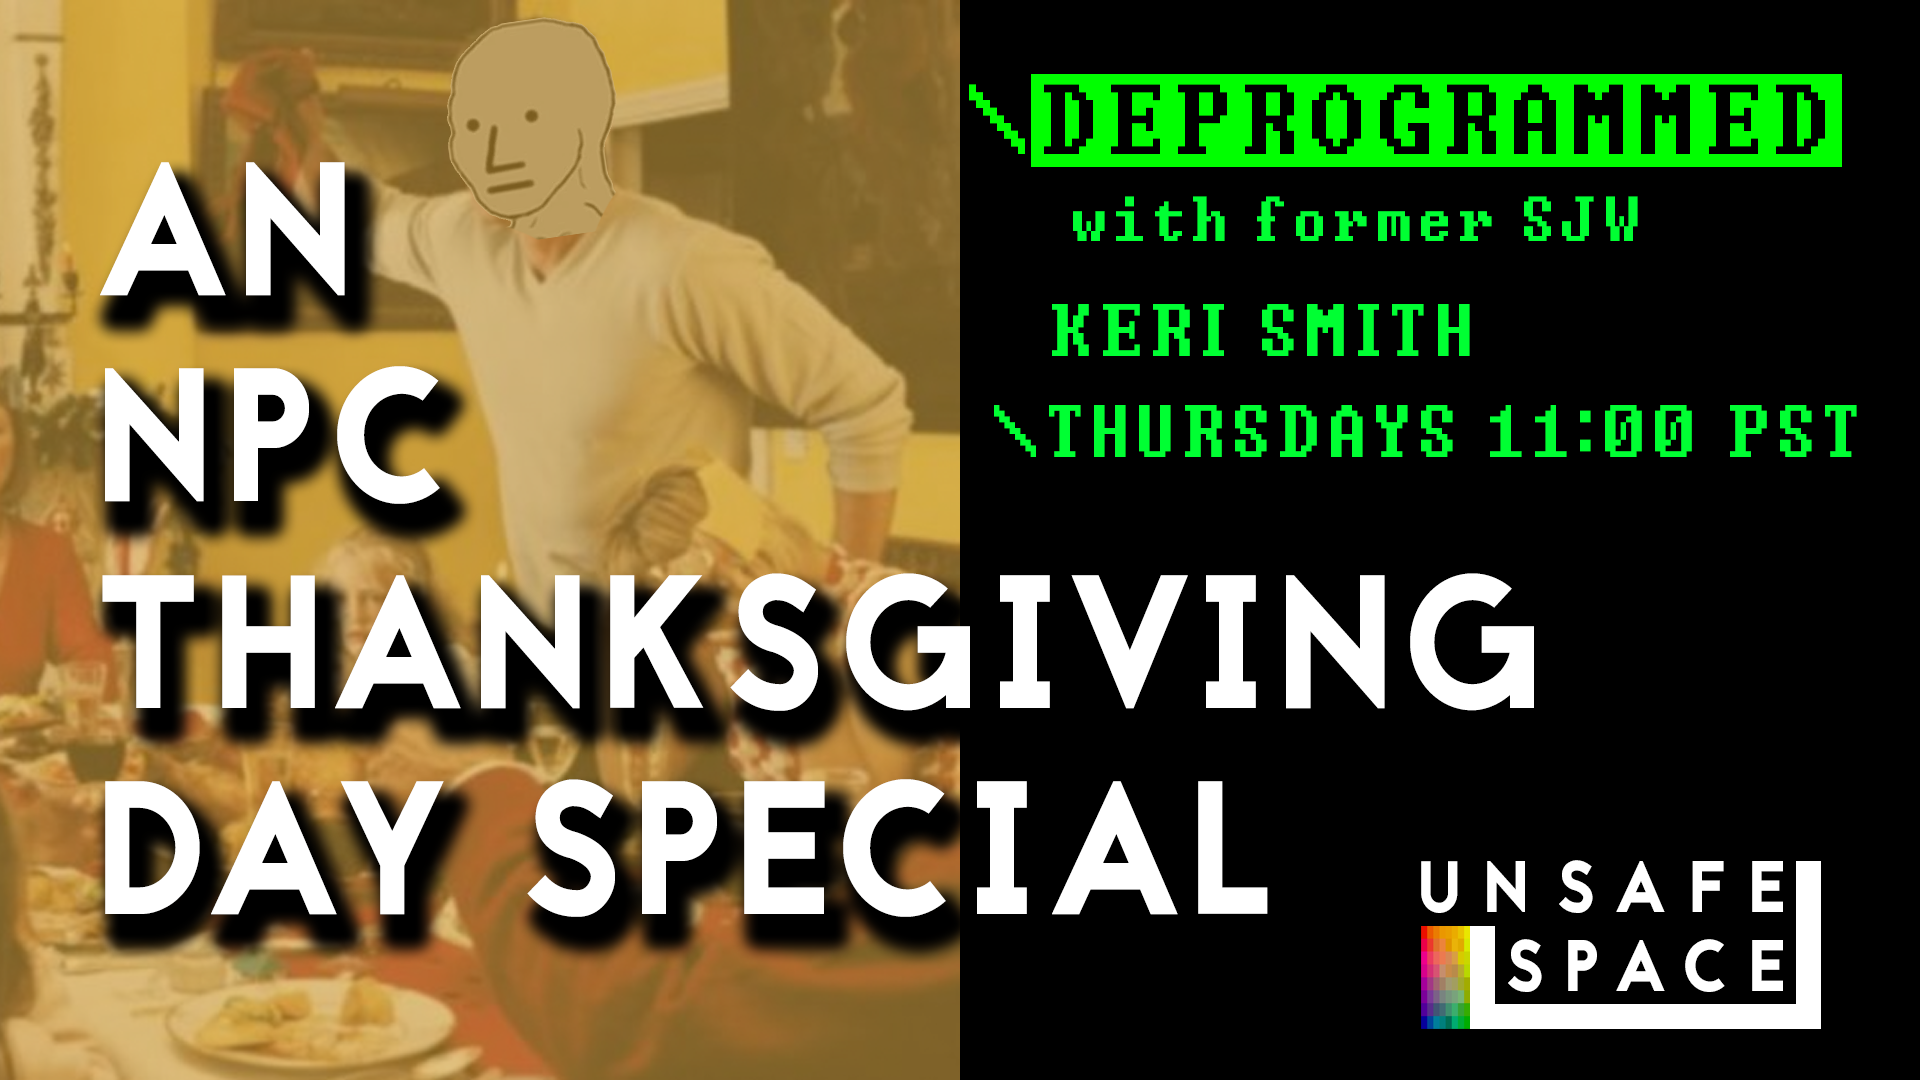 [Episode 035] Deprogrammed: An NPC Thanksgiving Day Special